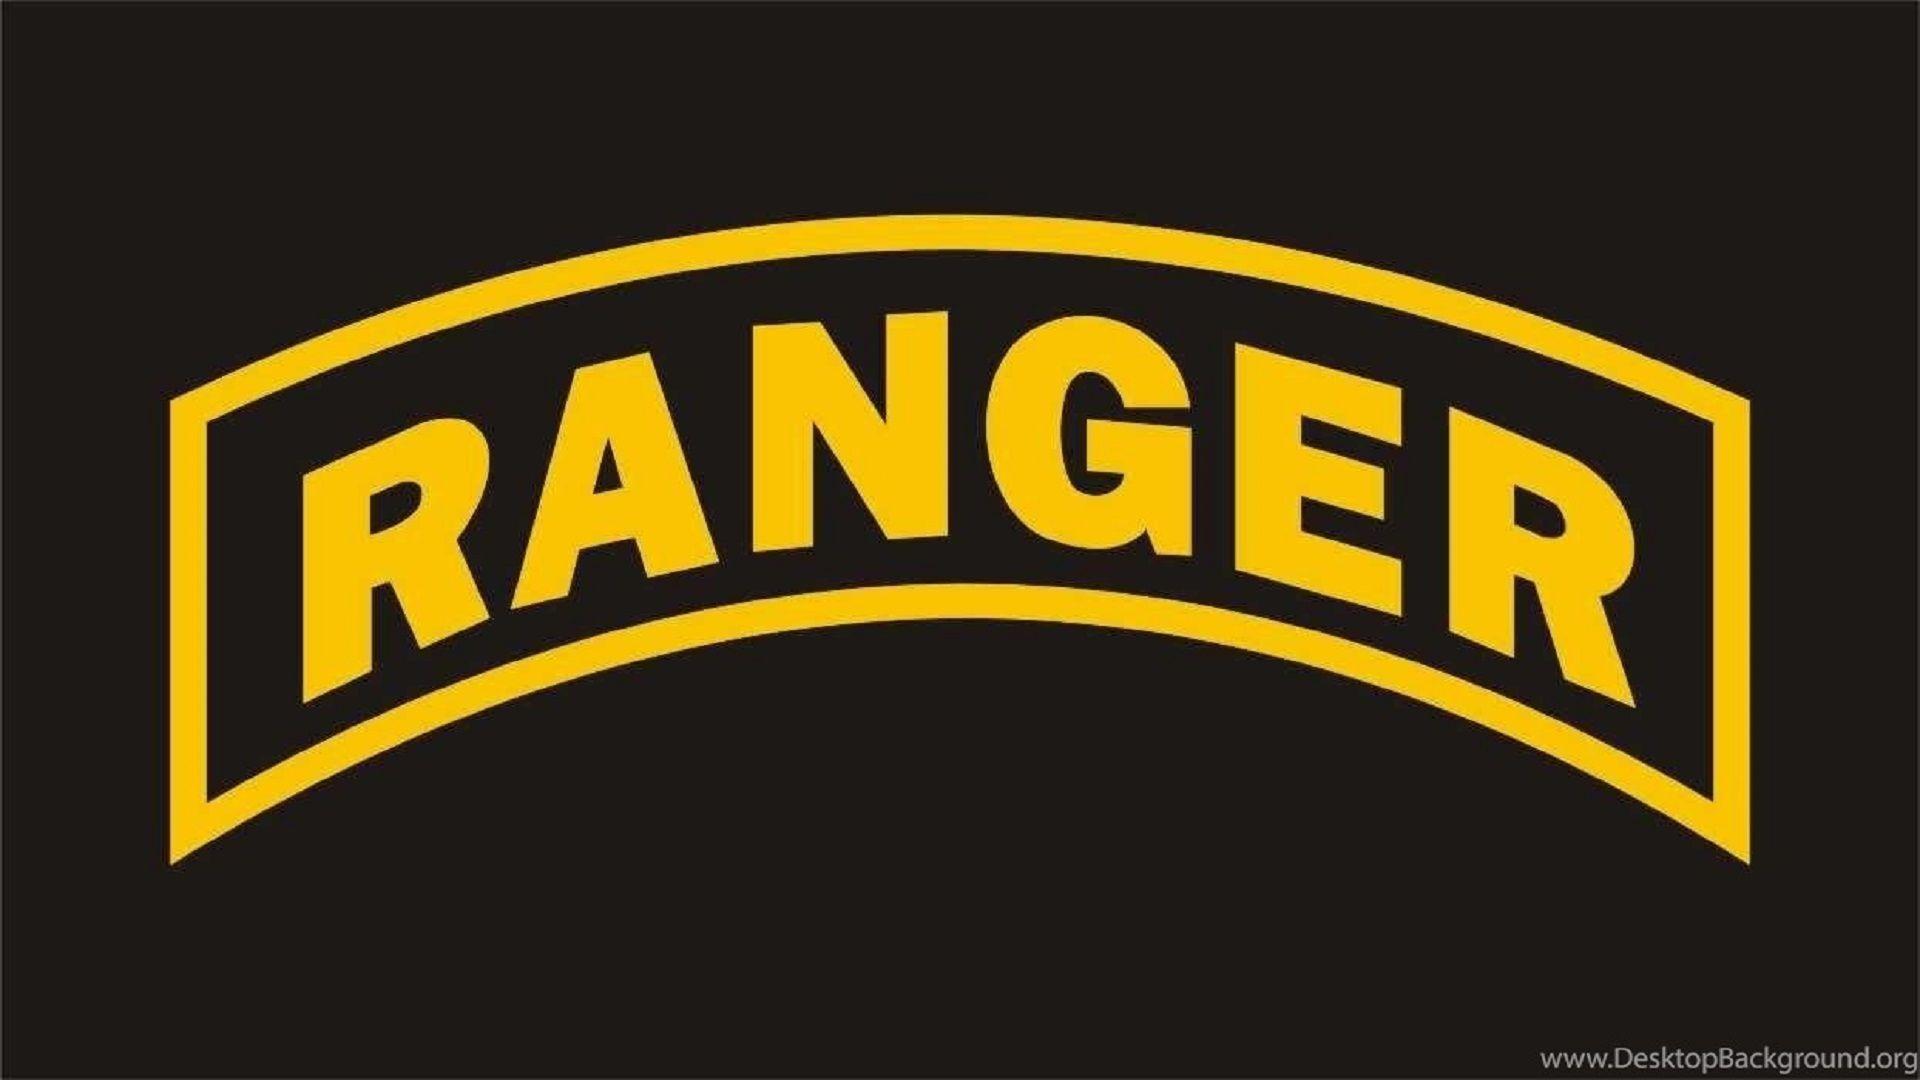 army ranger symbol